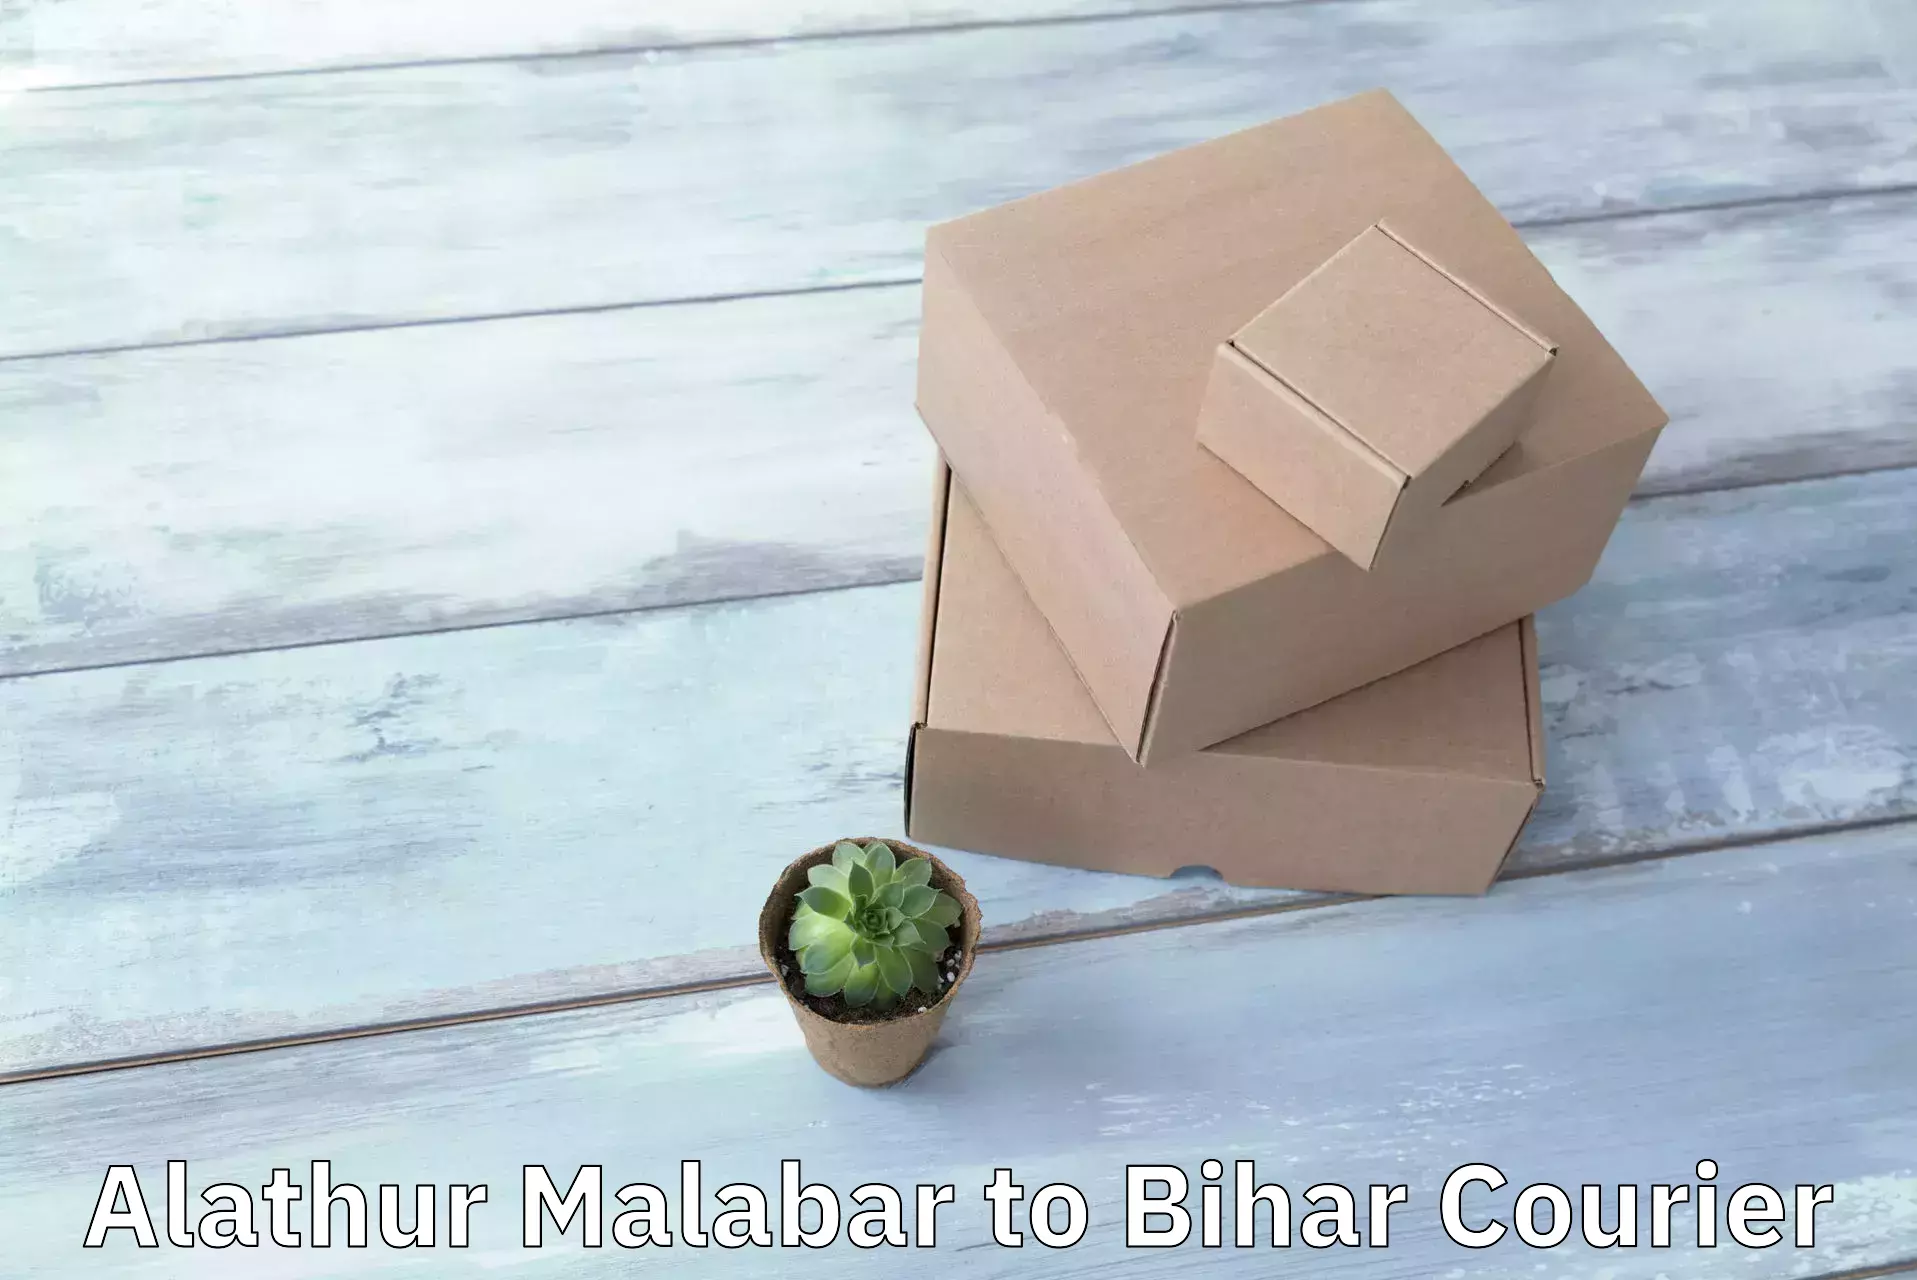 Courier service innovation Alathur Malabar to Udakishanganj